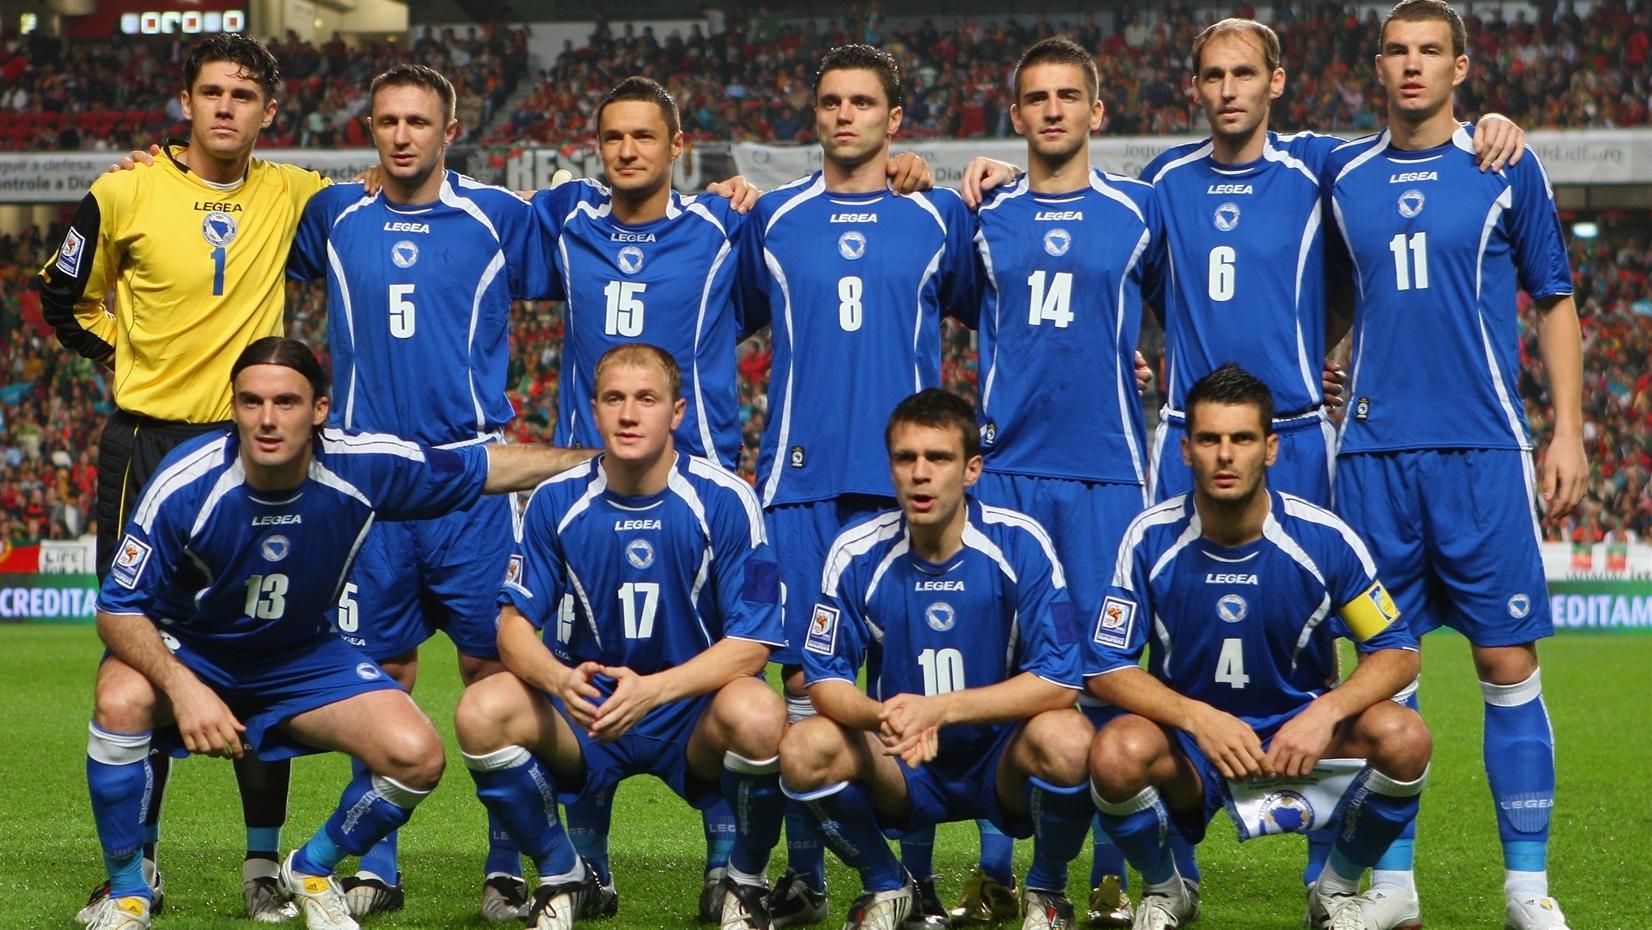 Selección de fútbol de bosnia y herzegovina